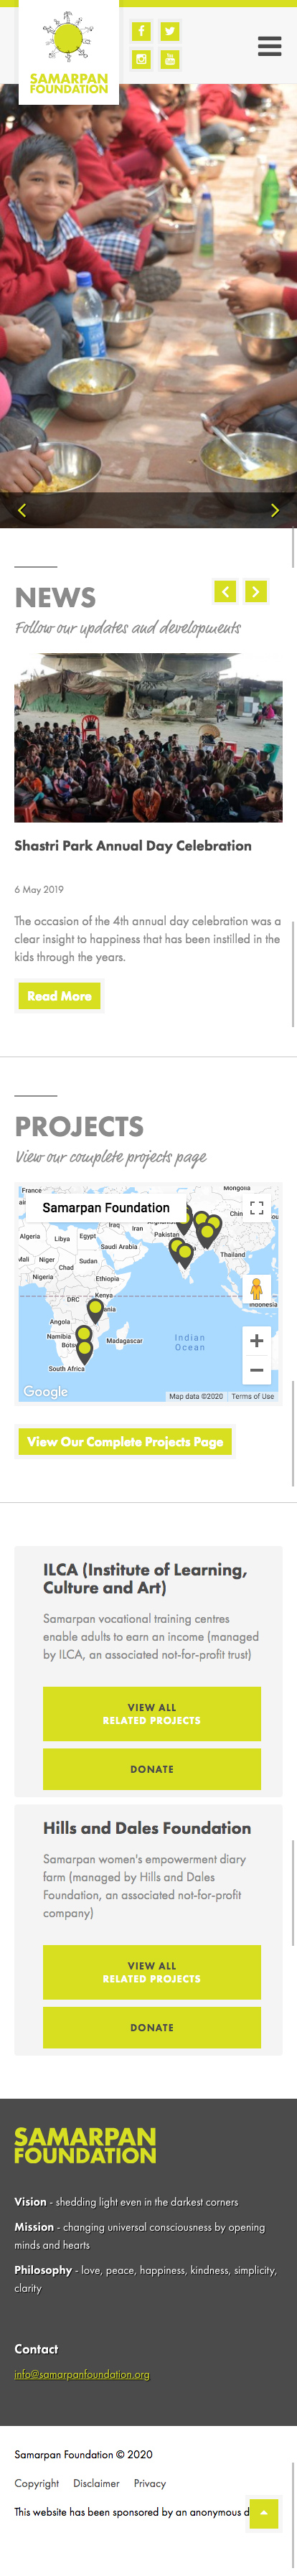 Samarpan Foundation Website